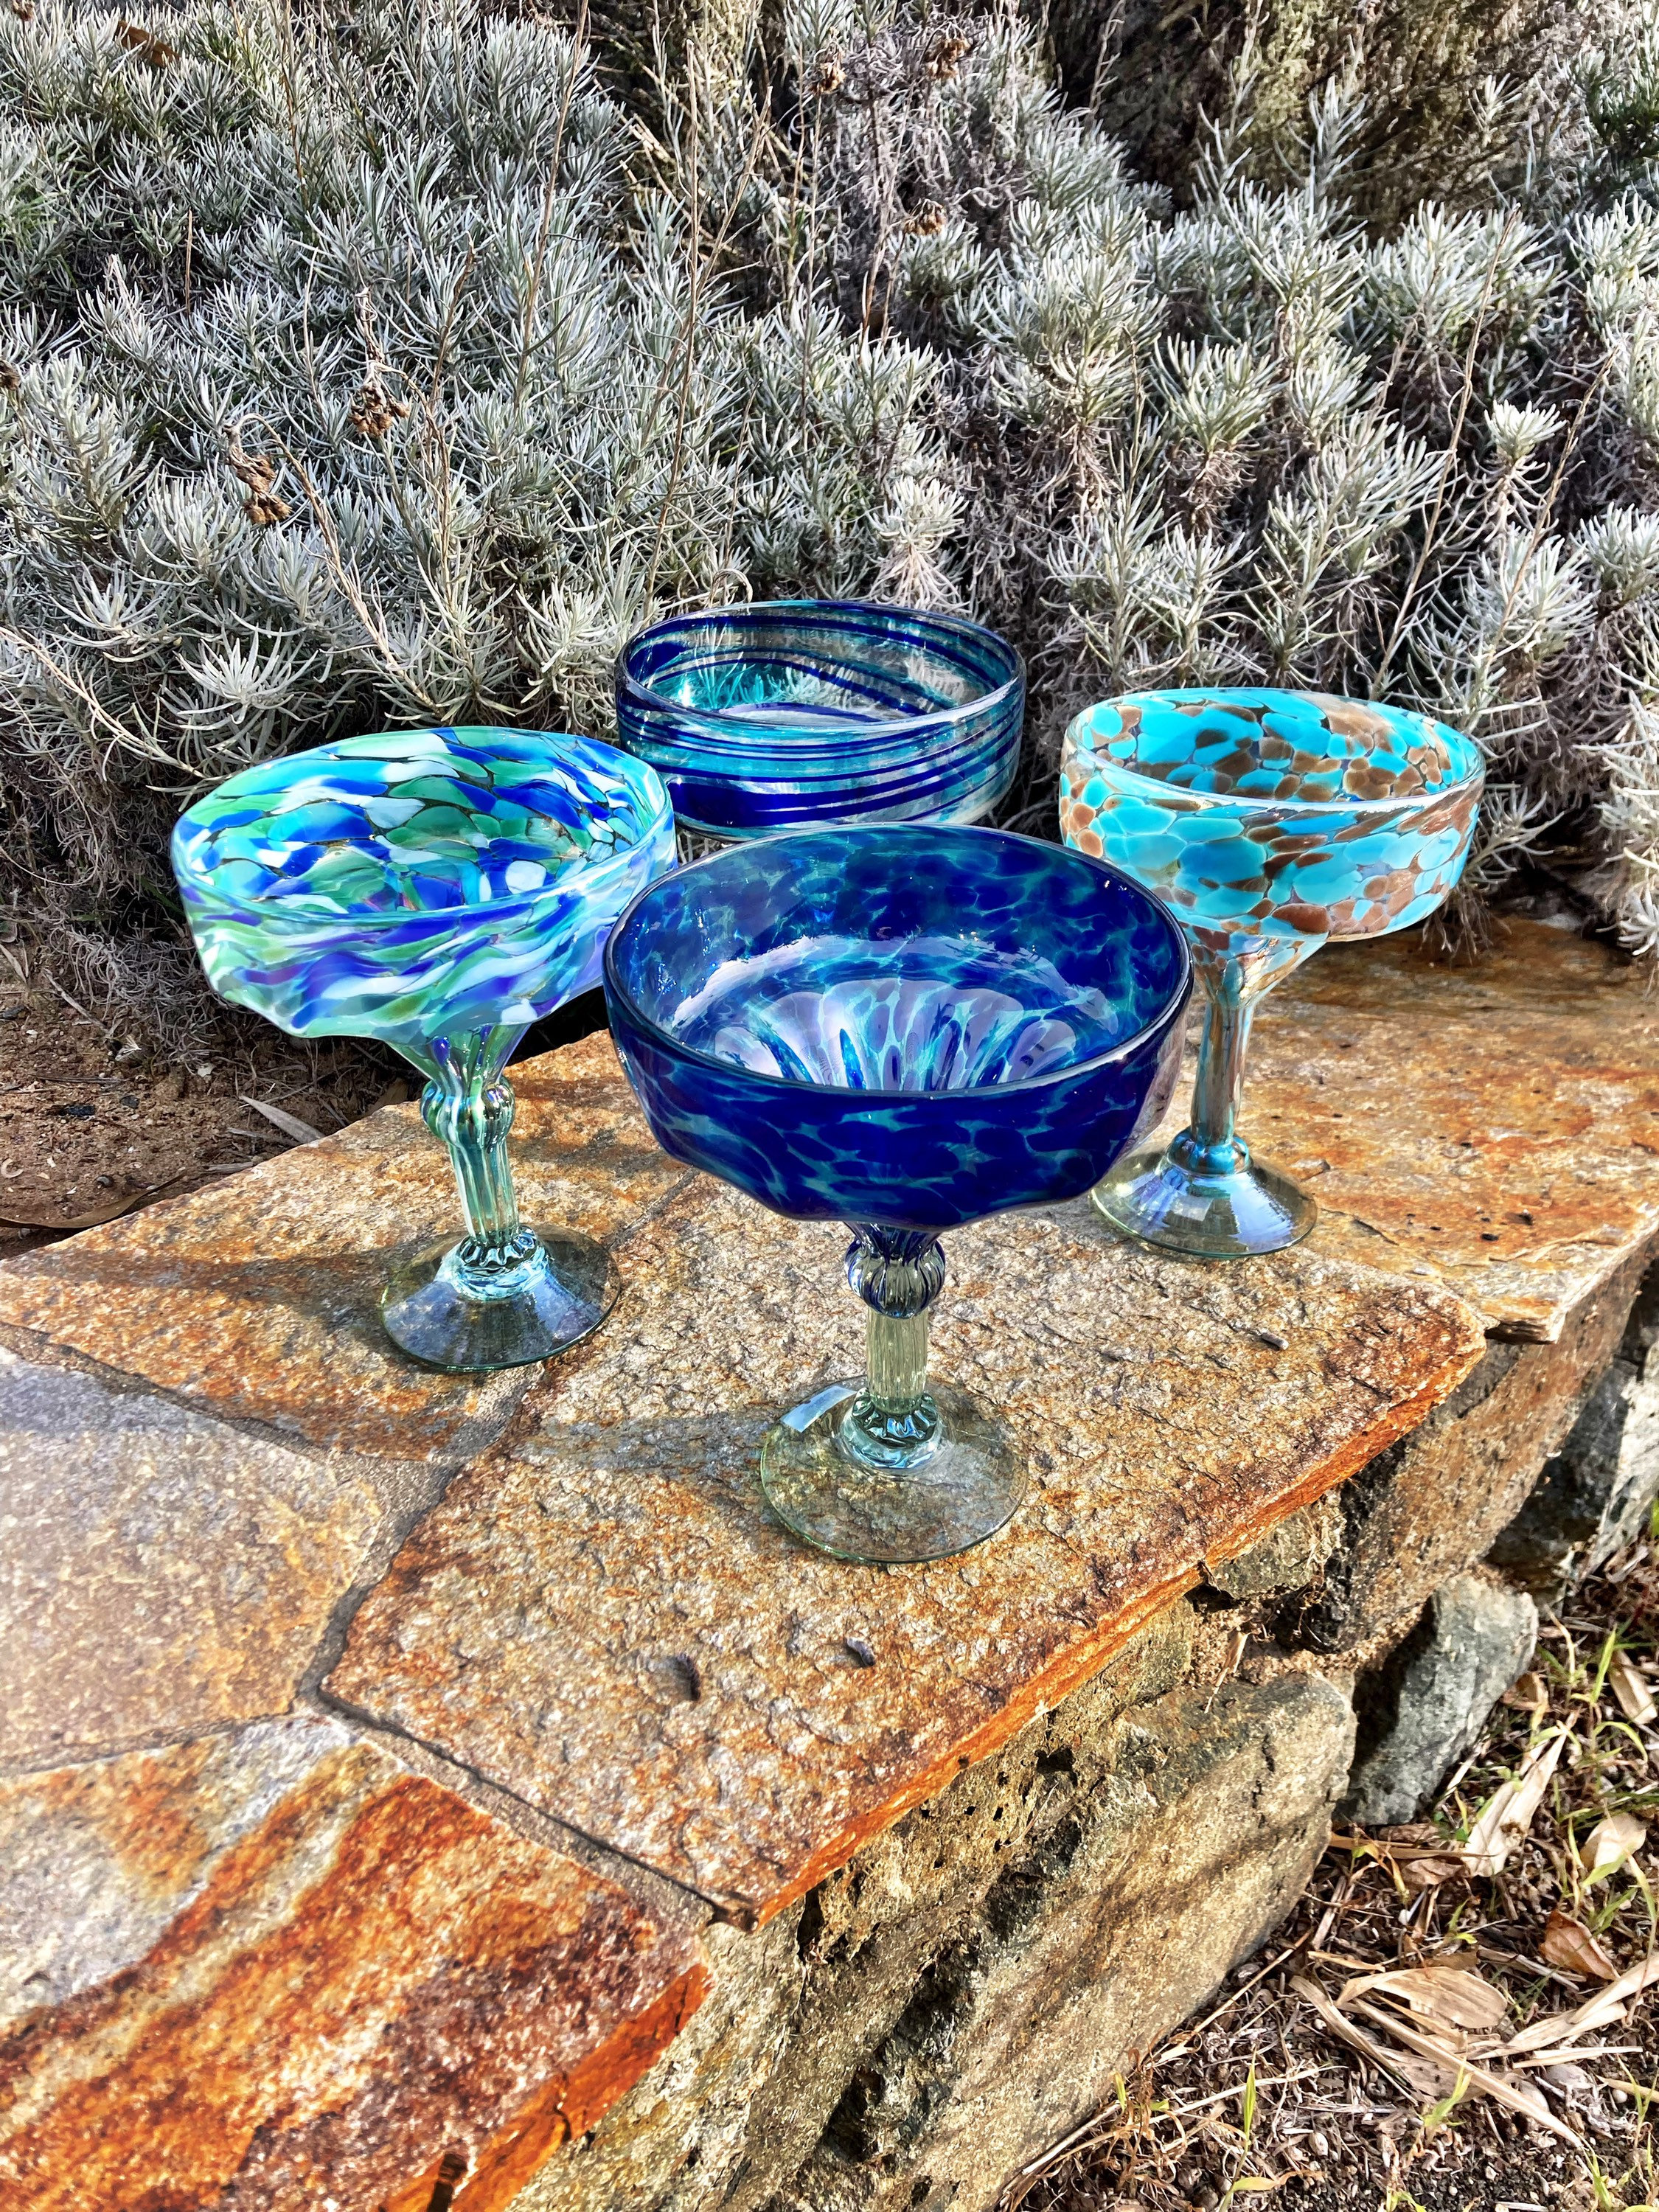 Acrylic Martini Glass custom printed 10 oz 24 glasses